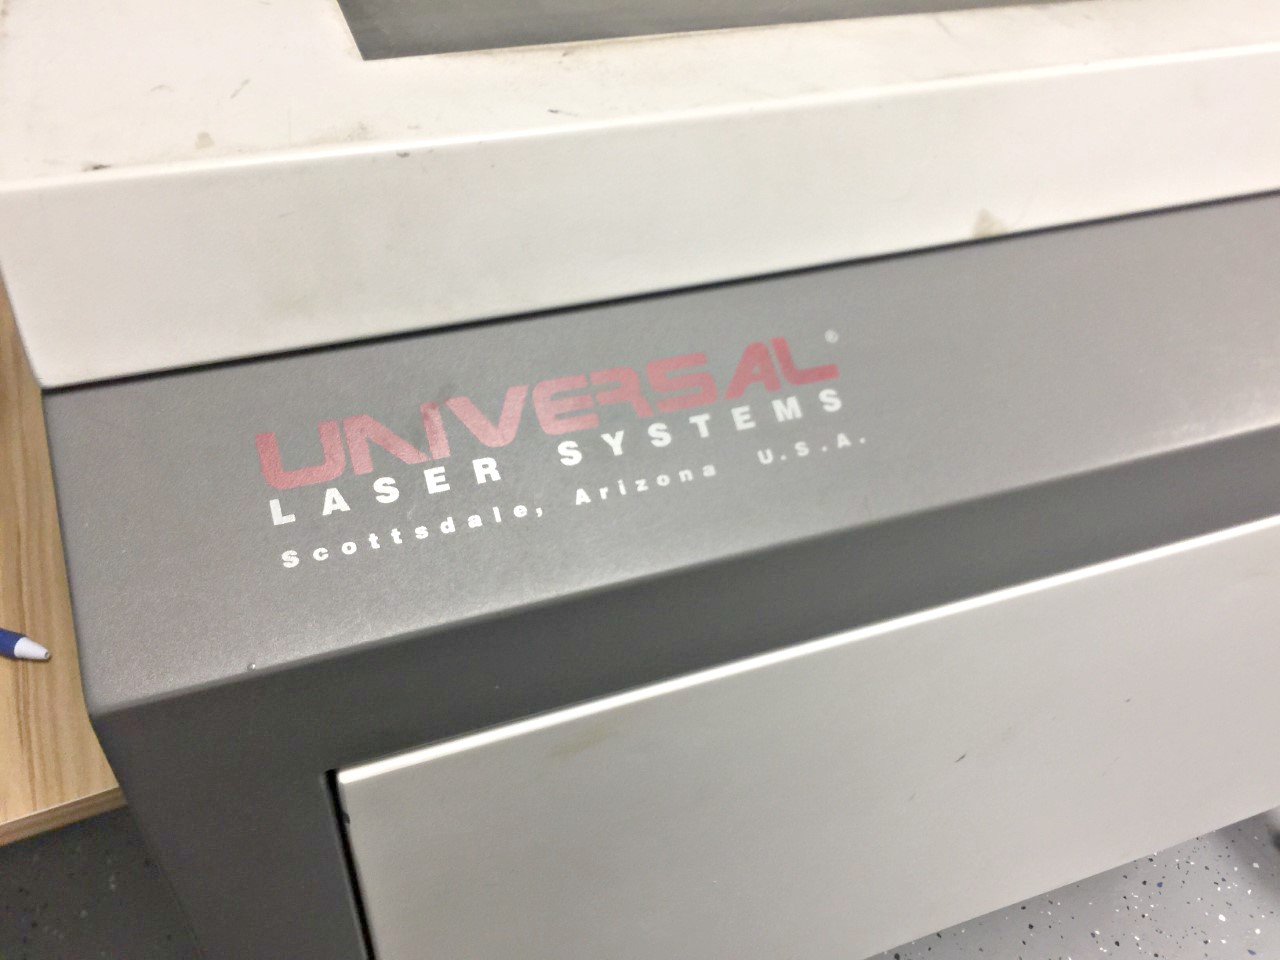 Universal X6.60 Laser Engraver (used) Item # UE-47